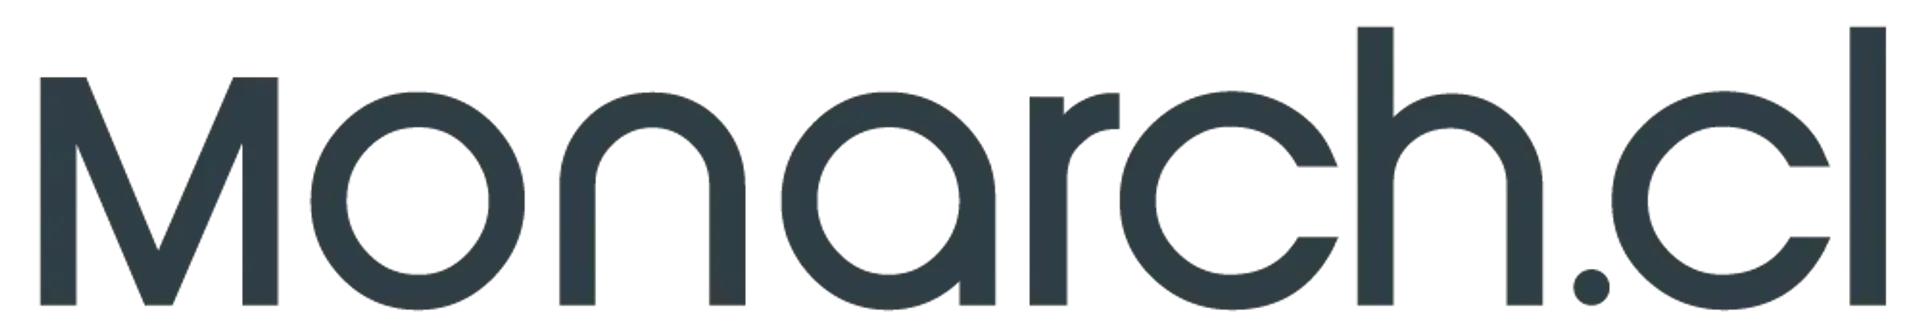 MONARCH logo de catálogo